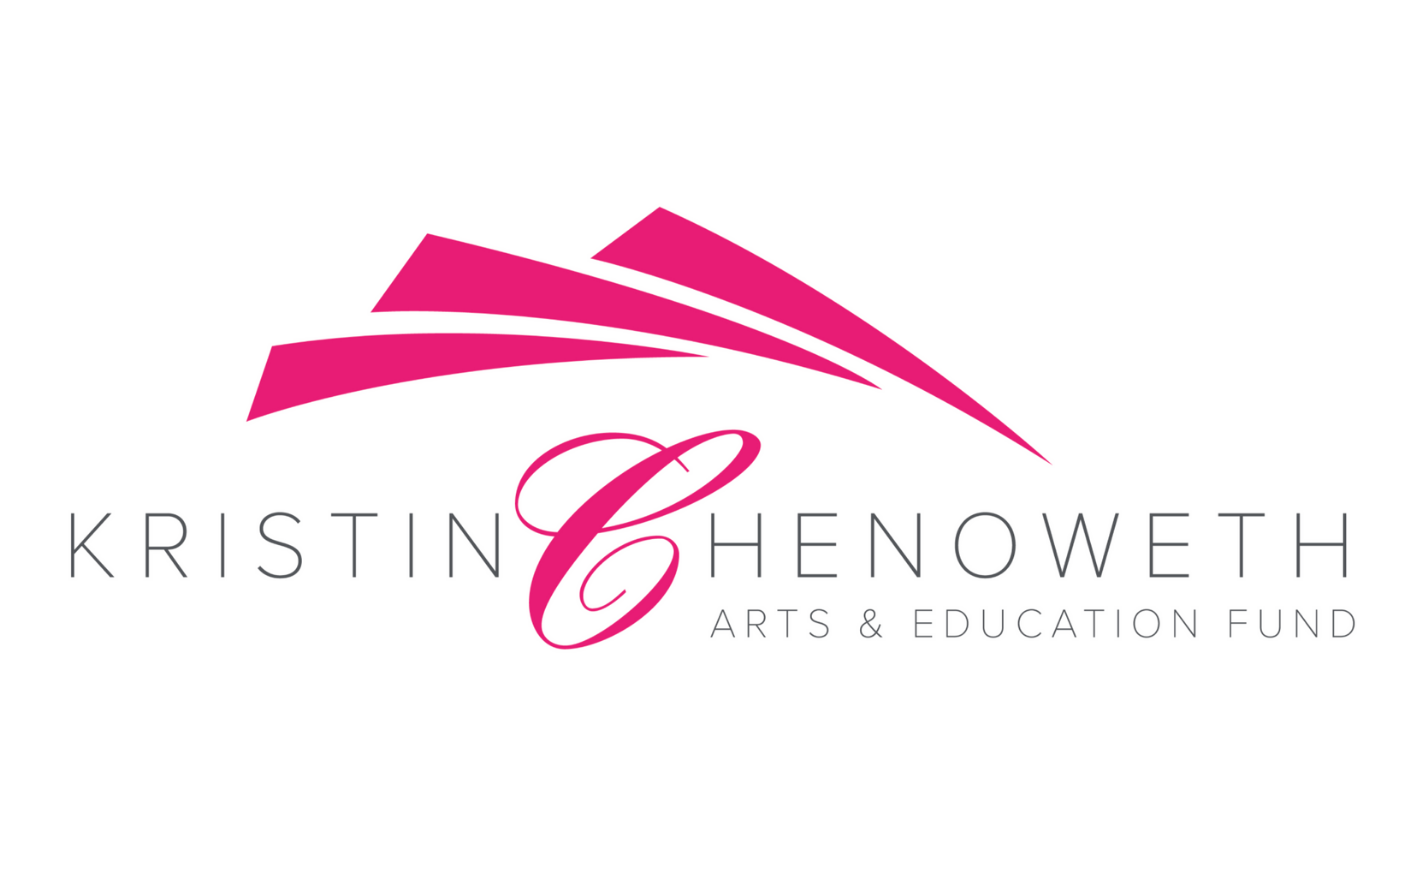 Magenta and white The Kristin Chenoweth Arts & Education Fund logo